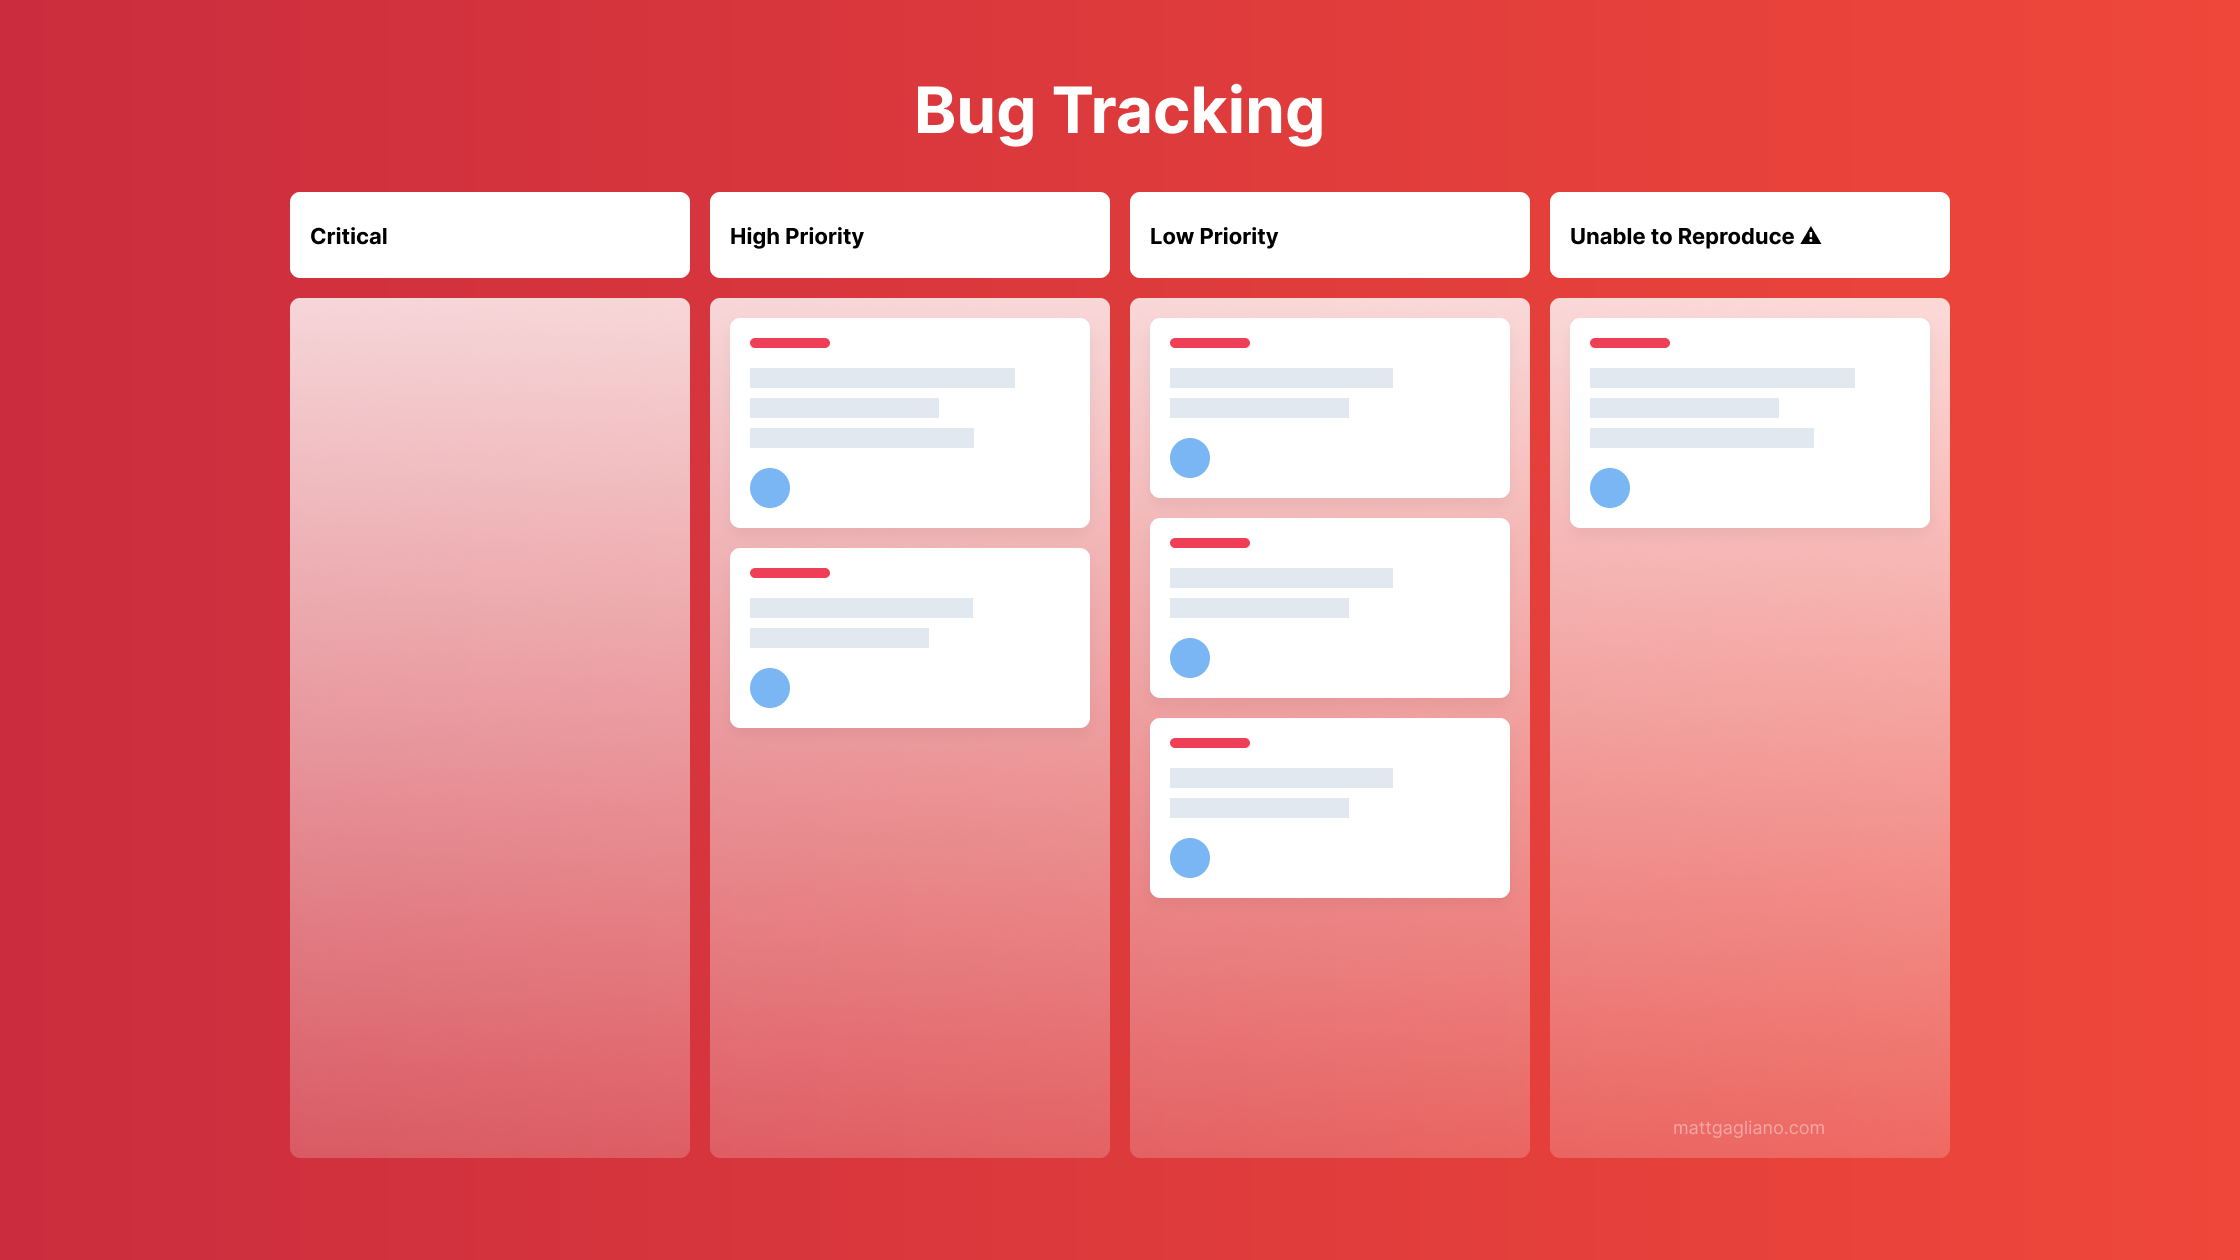 Engineering Team Bug Tracking Workflow by Matt Gagliano